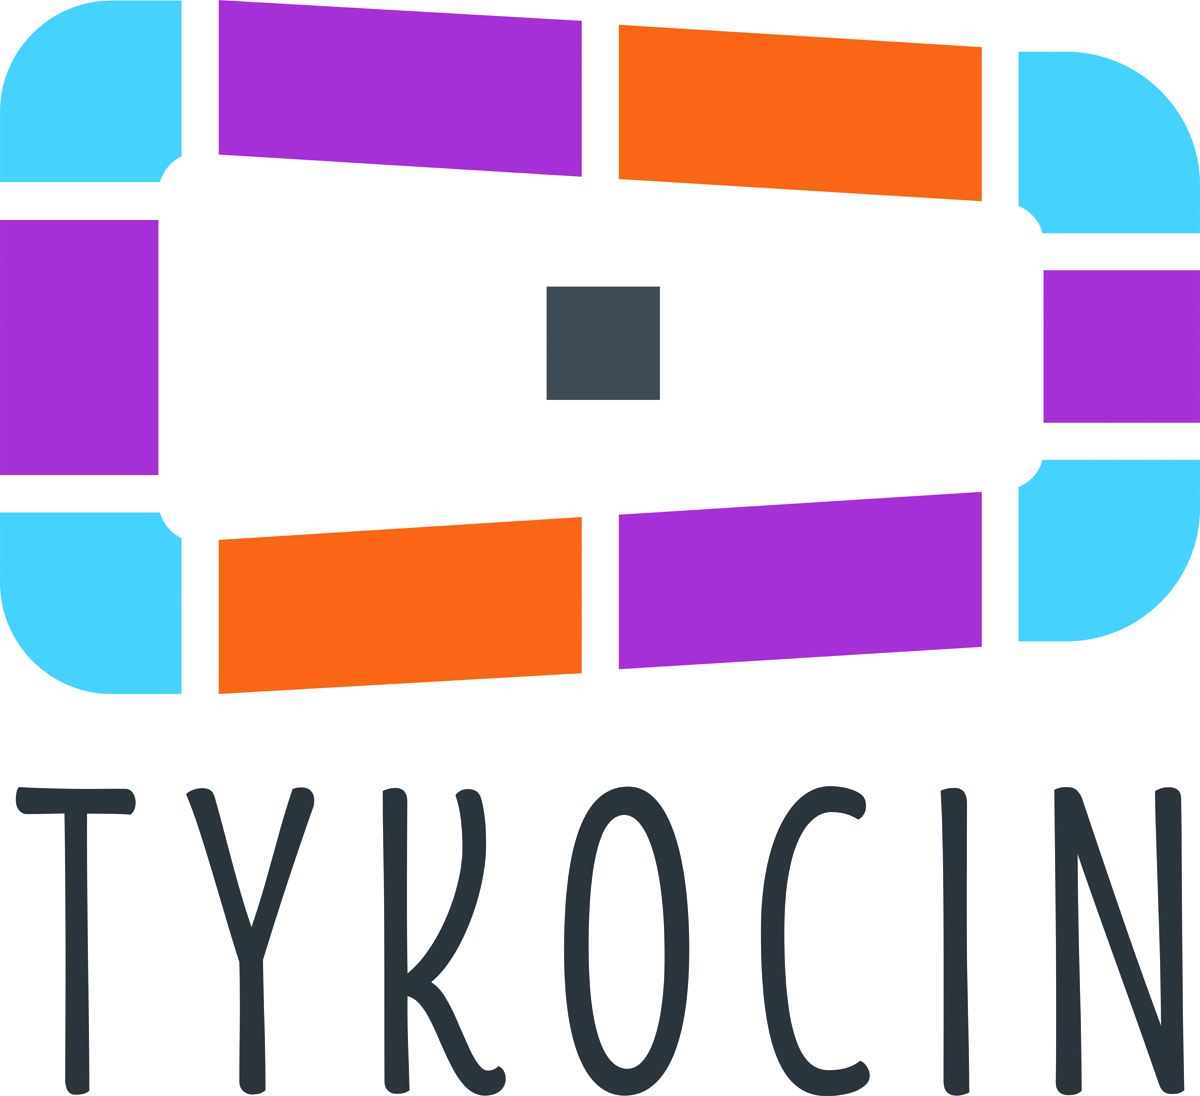 Tykocin logo CMYK small